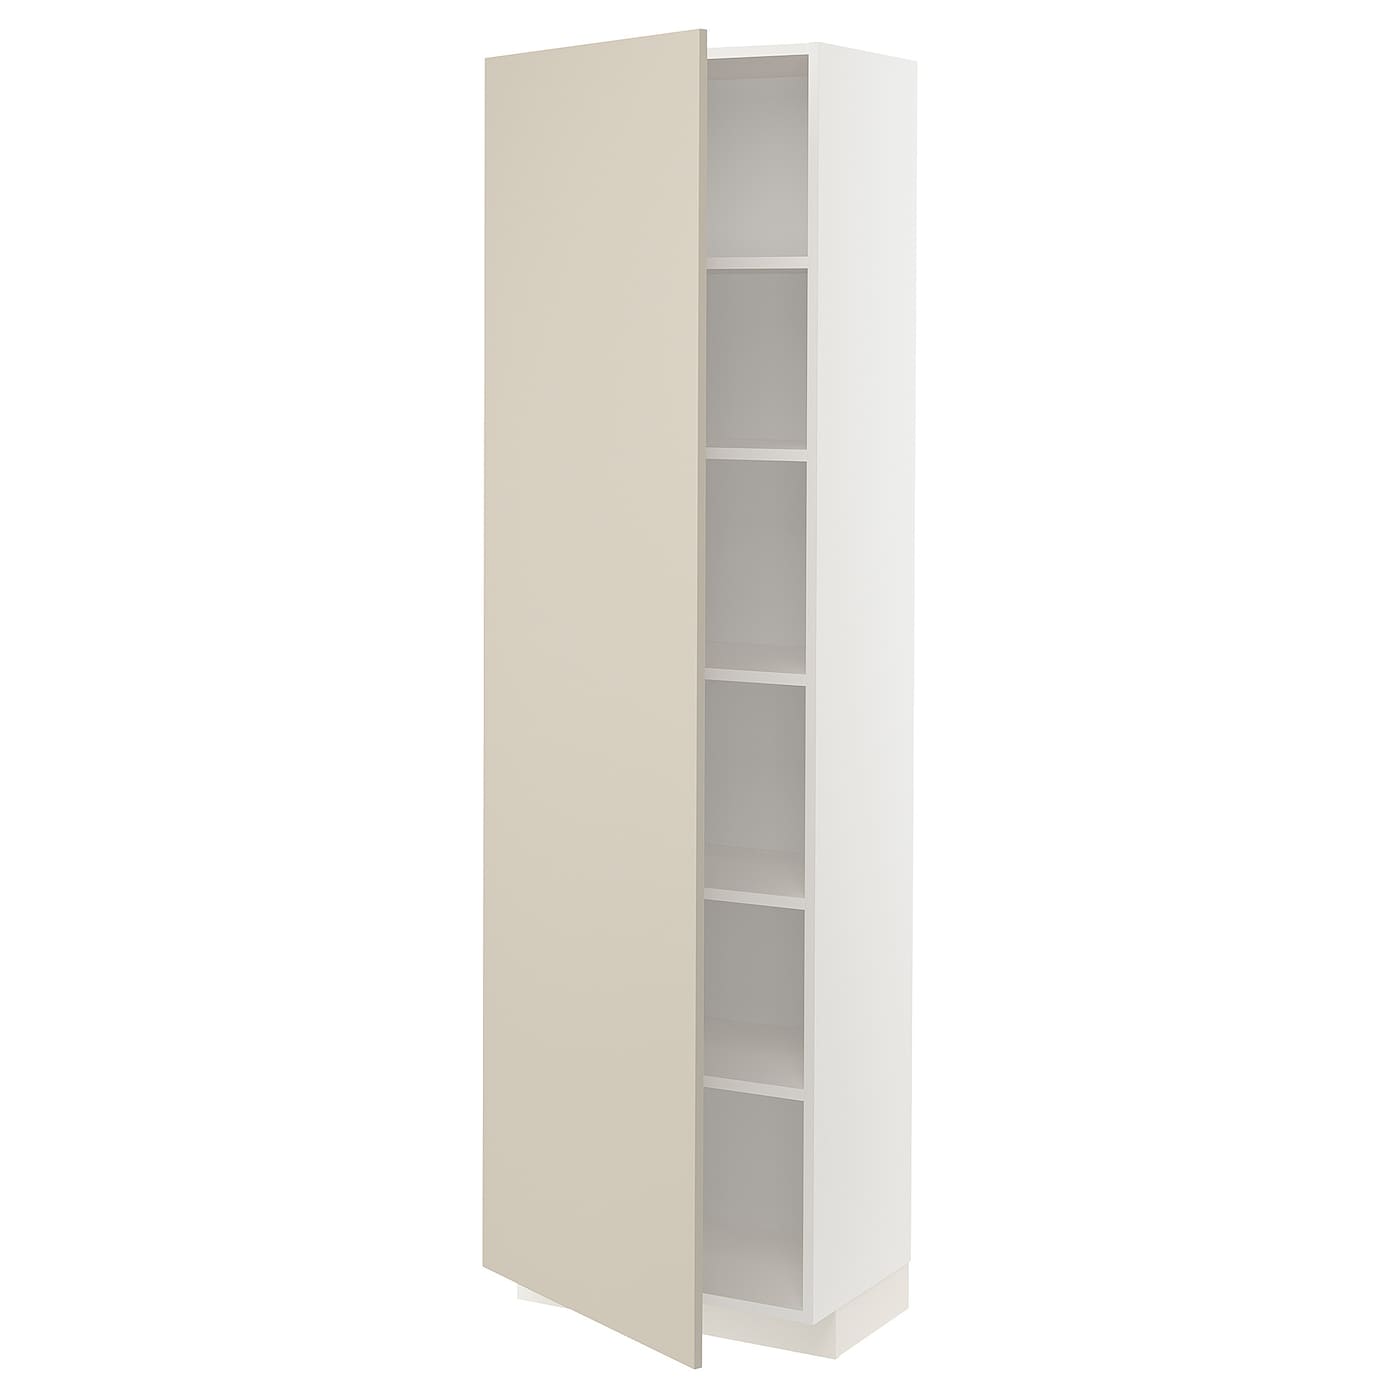 Высокий кухонный шкаф с полками - IKEA METOD/МЕТОД ИКЕА, 200х37х60 см, белый/бежевый